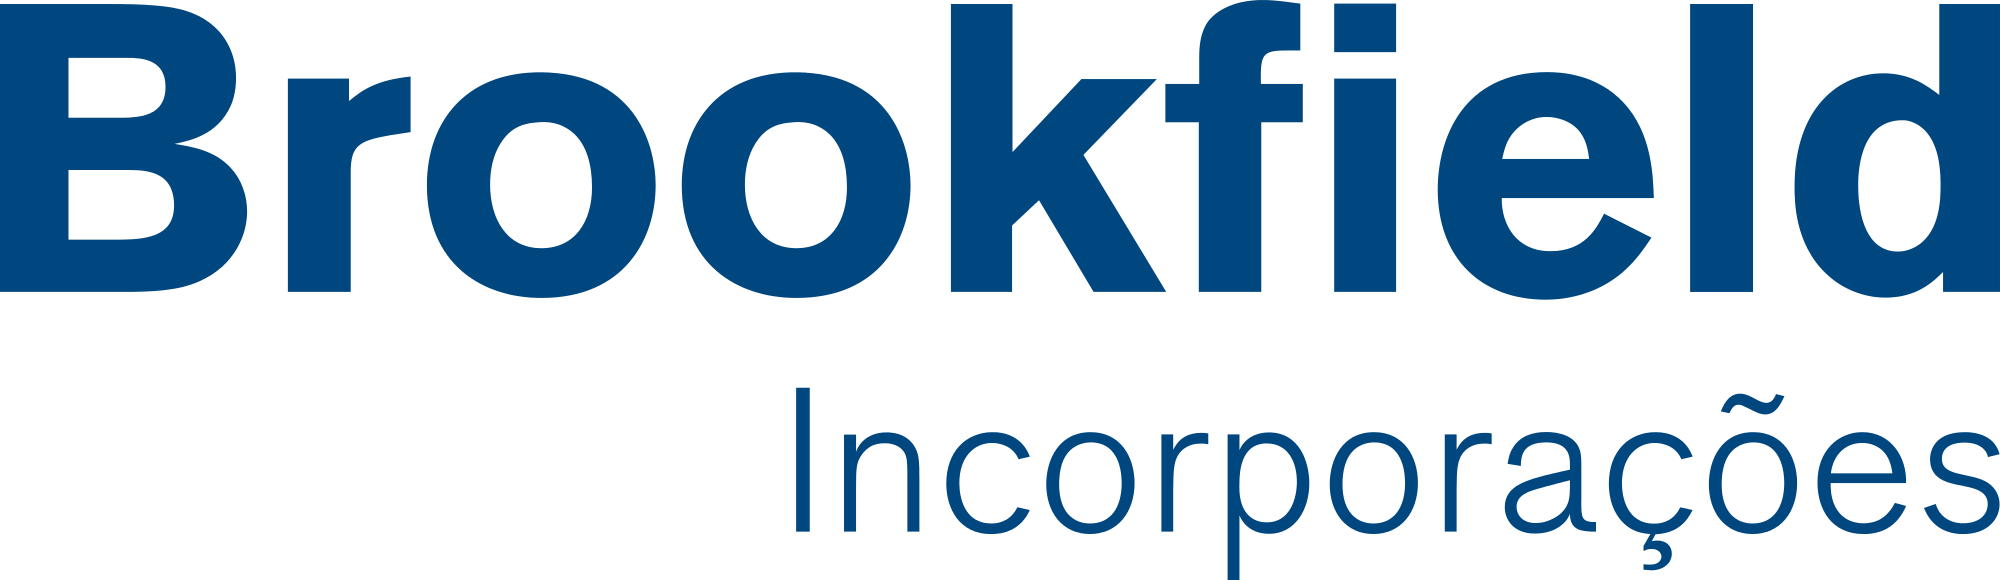 Brooksfield logo